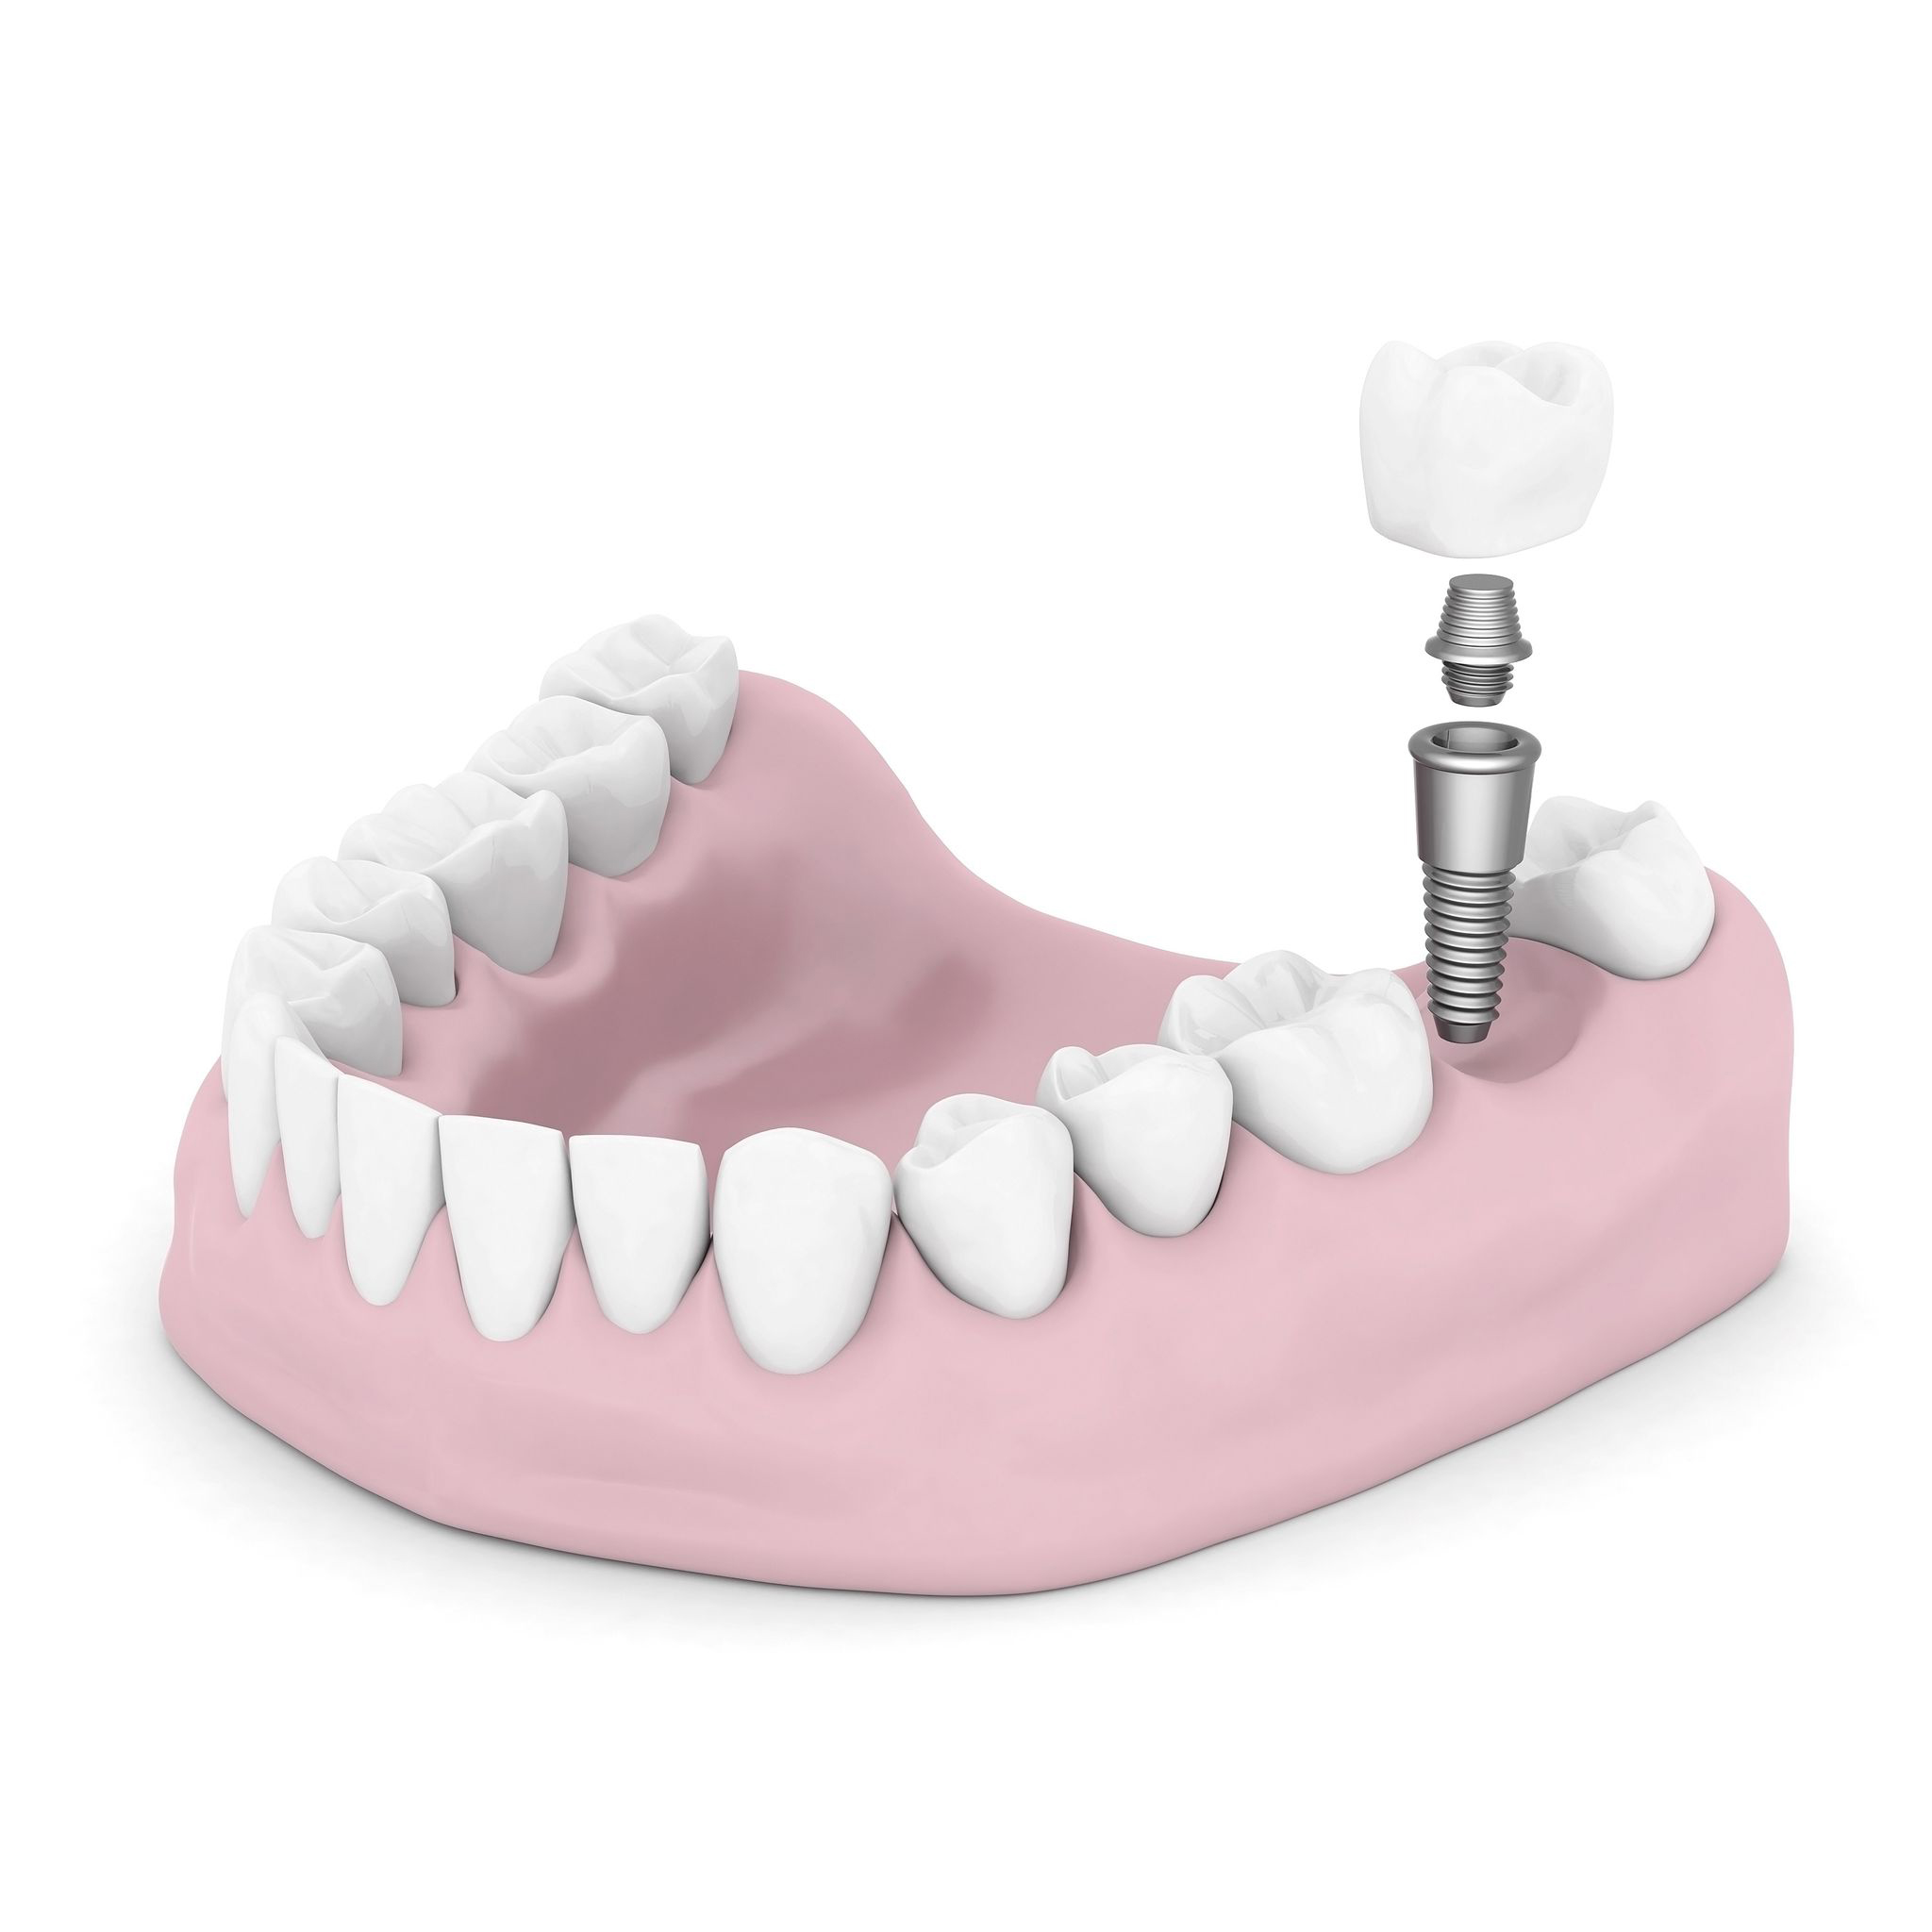 Where can I get Dental Implants in Glen Cove?